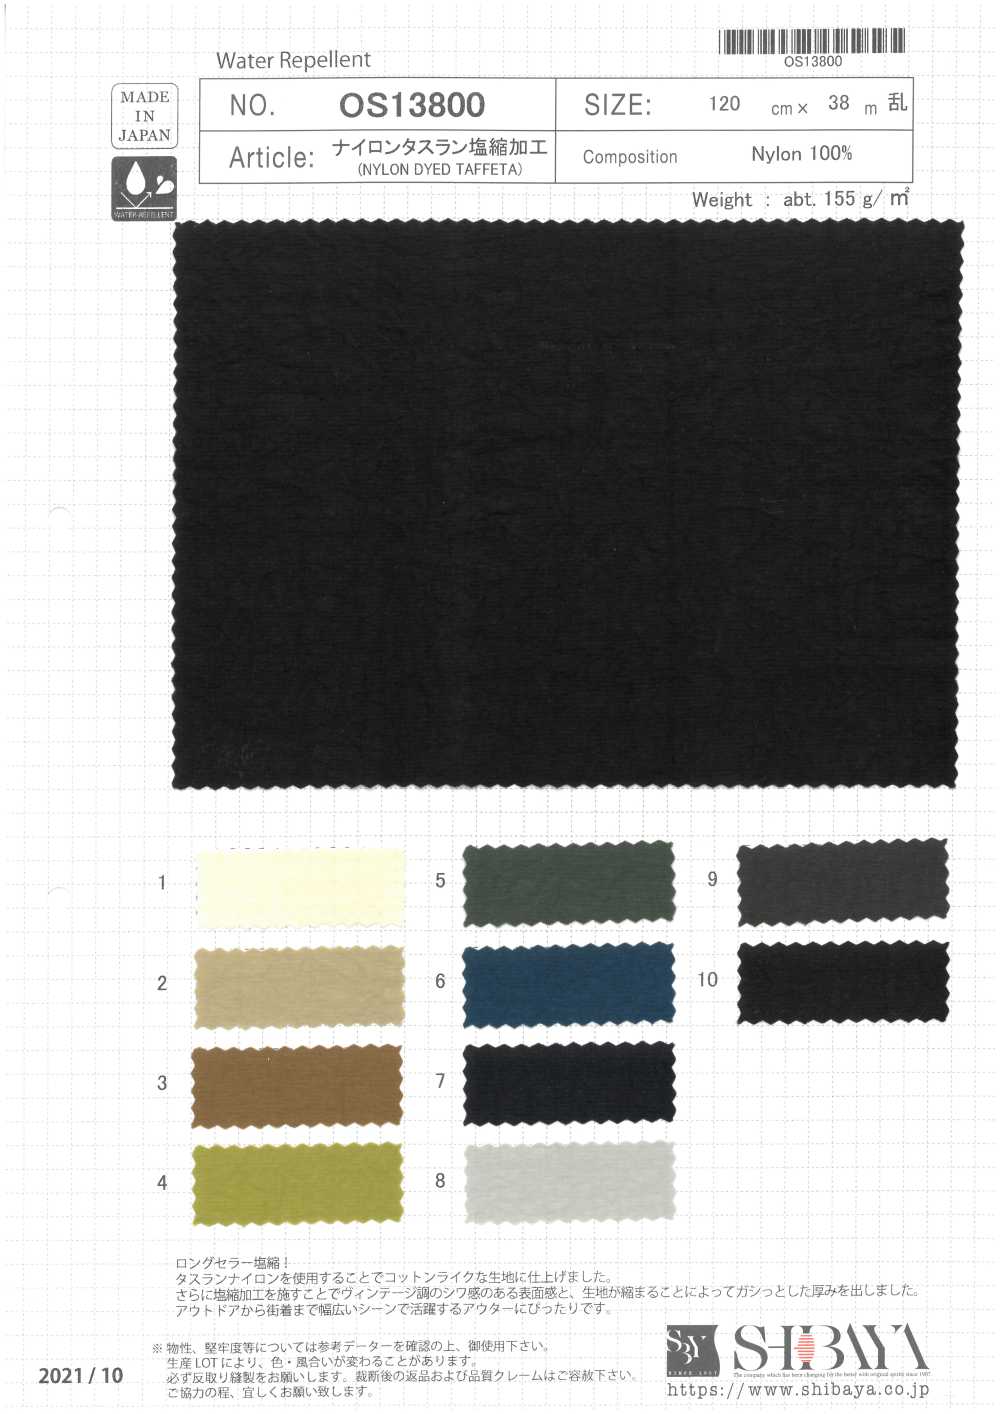 OS13800 Procesamiento De Encogimiento De Sal De Nylon Taslan[Fabrica Textil] SHIBAYA